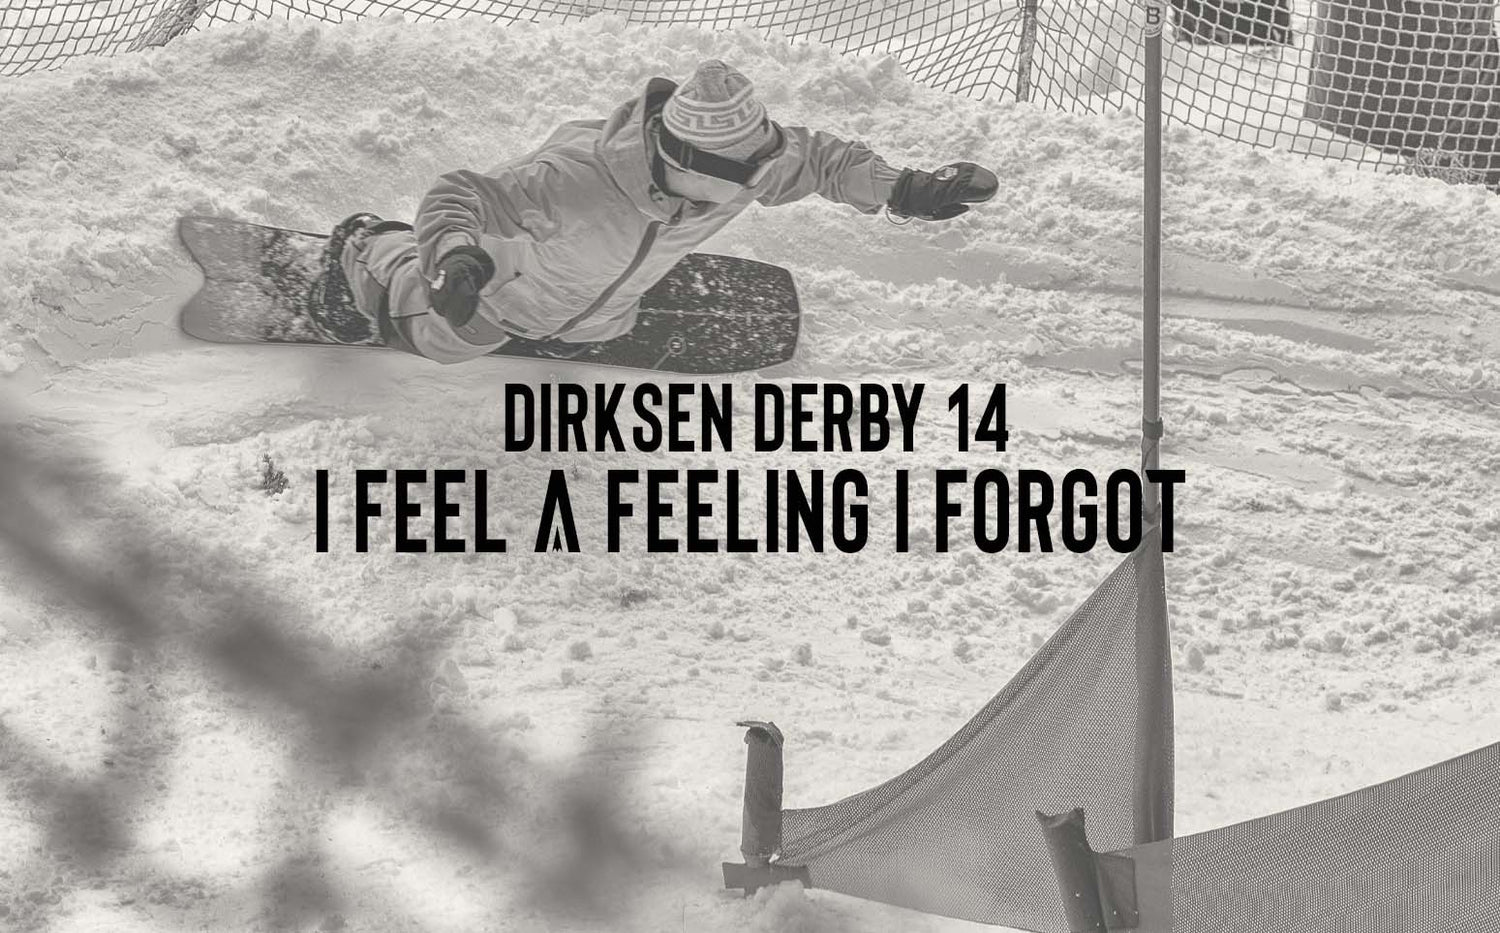 Dirksen Derby 14: "I Feel A Feeling I Forgot"